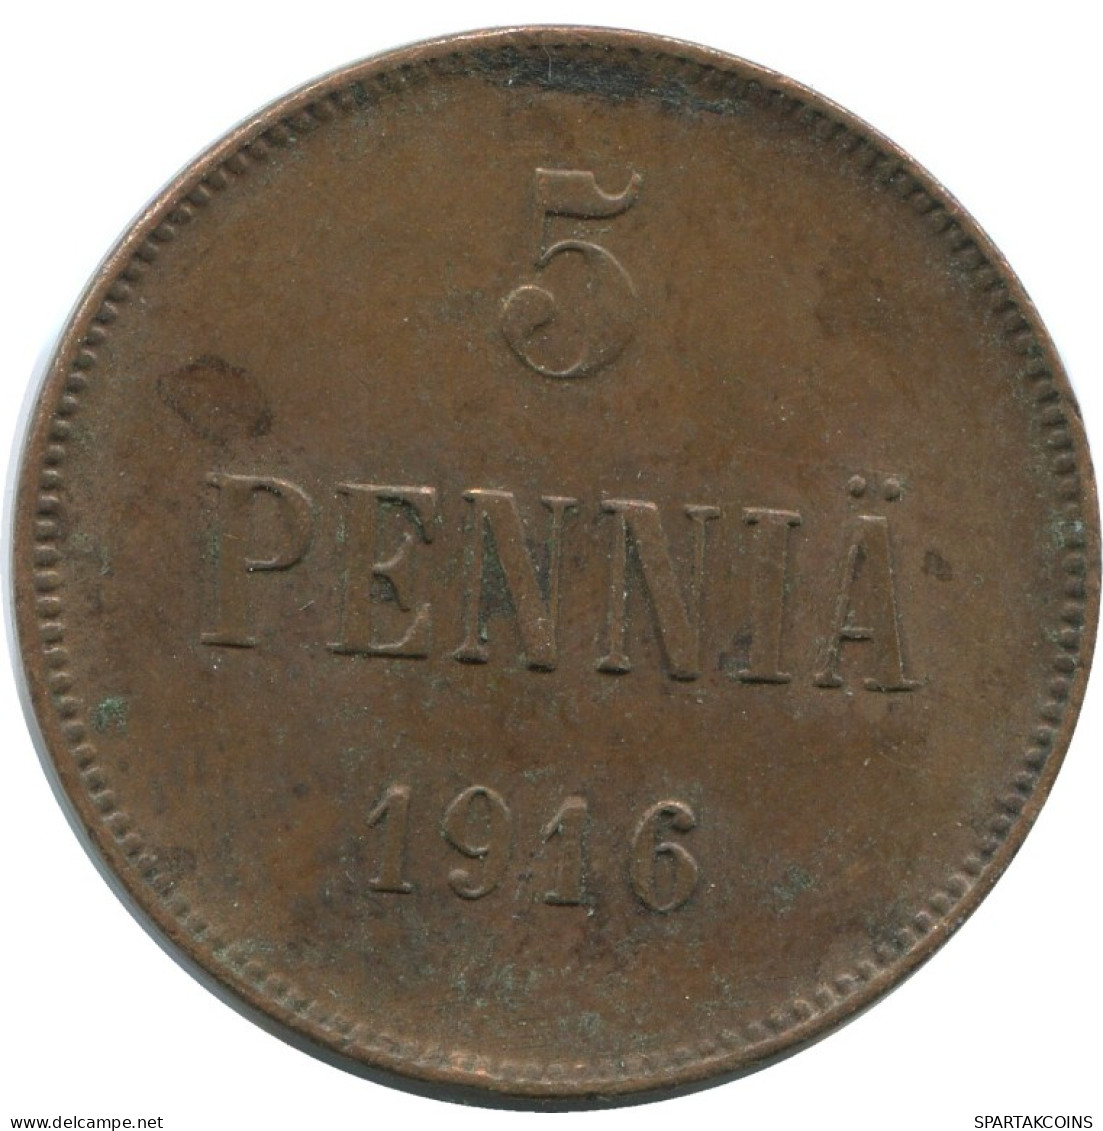 5 PENNIA 1916 FINLAND Coin RUSSIA EMPIRE #AB198.5.U.A - Finnland